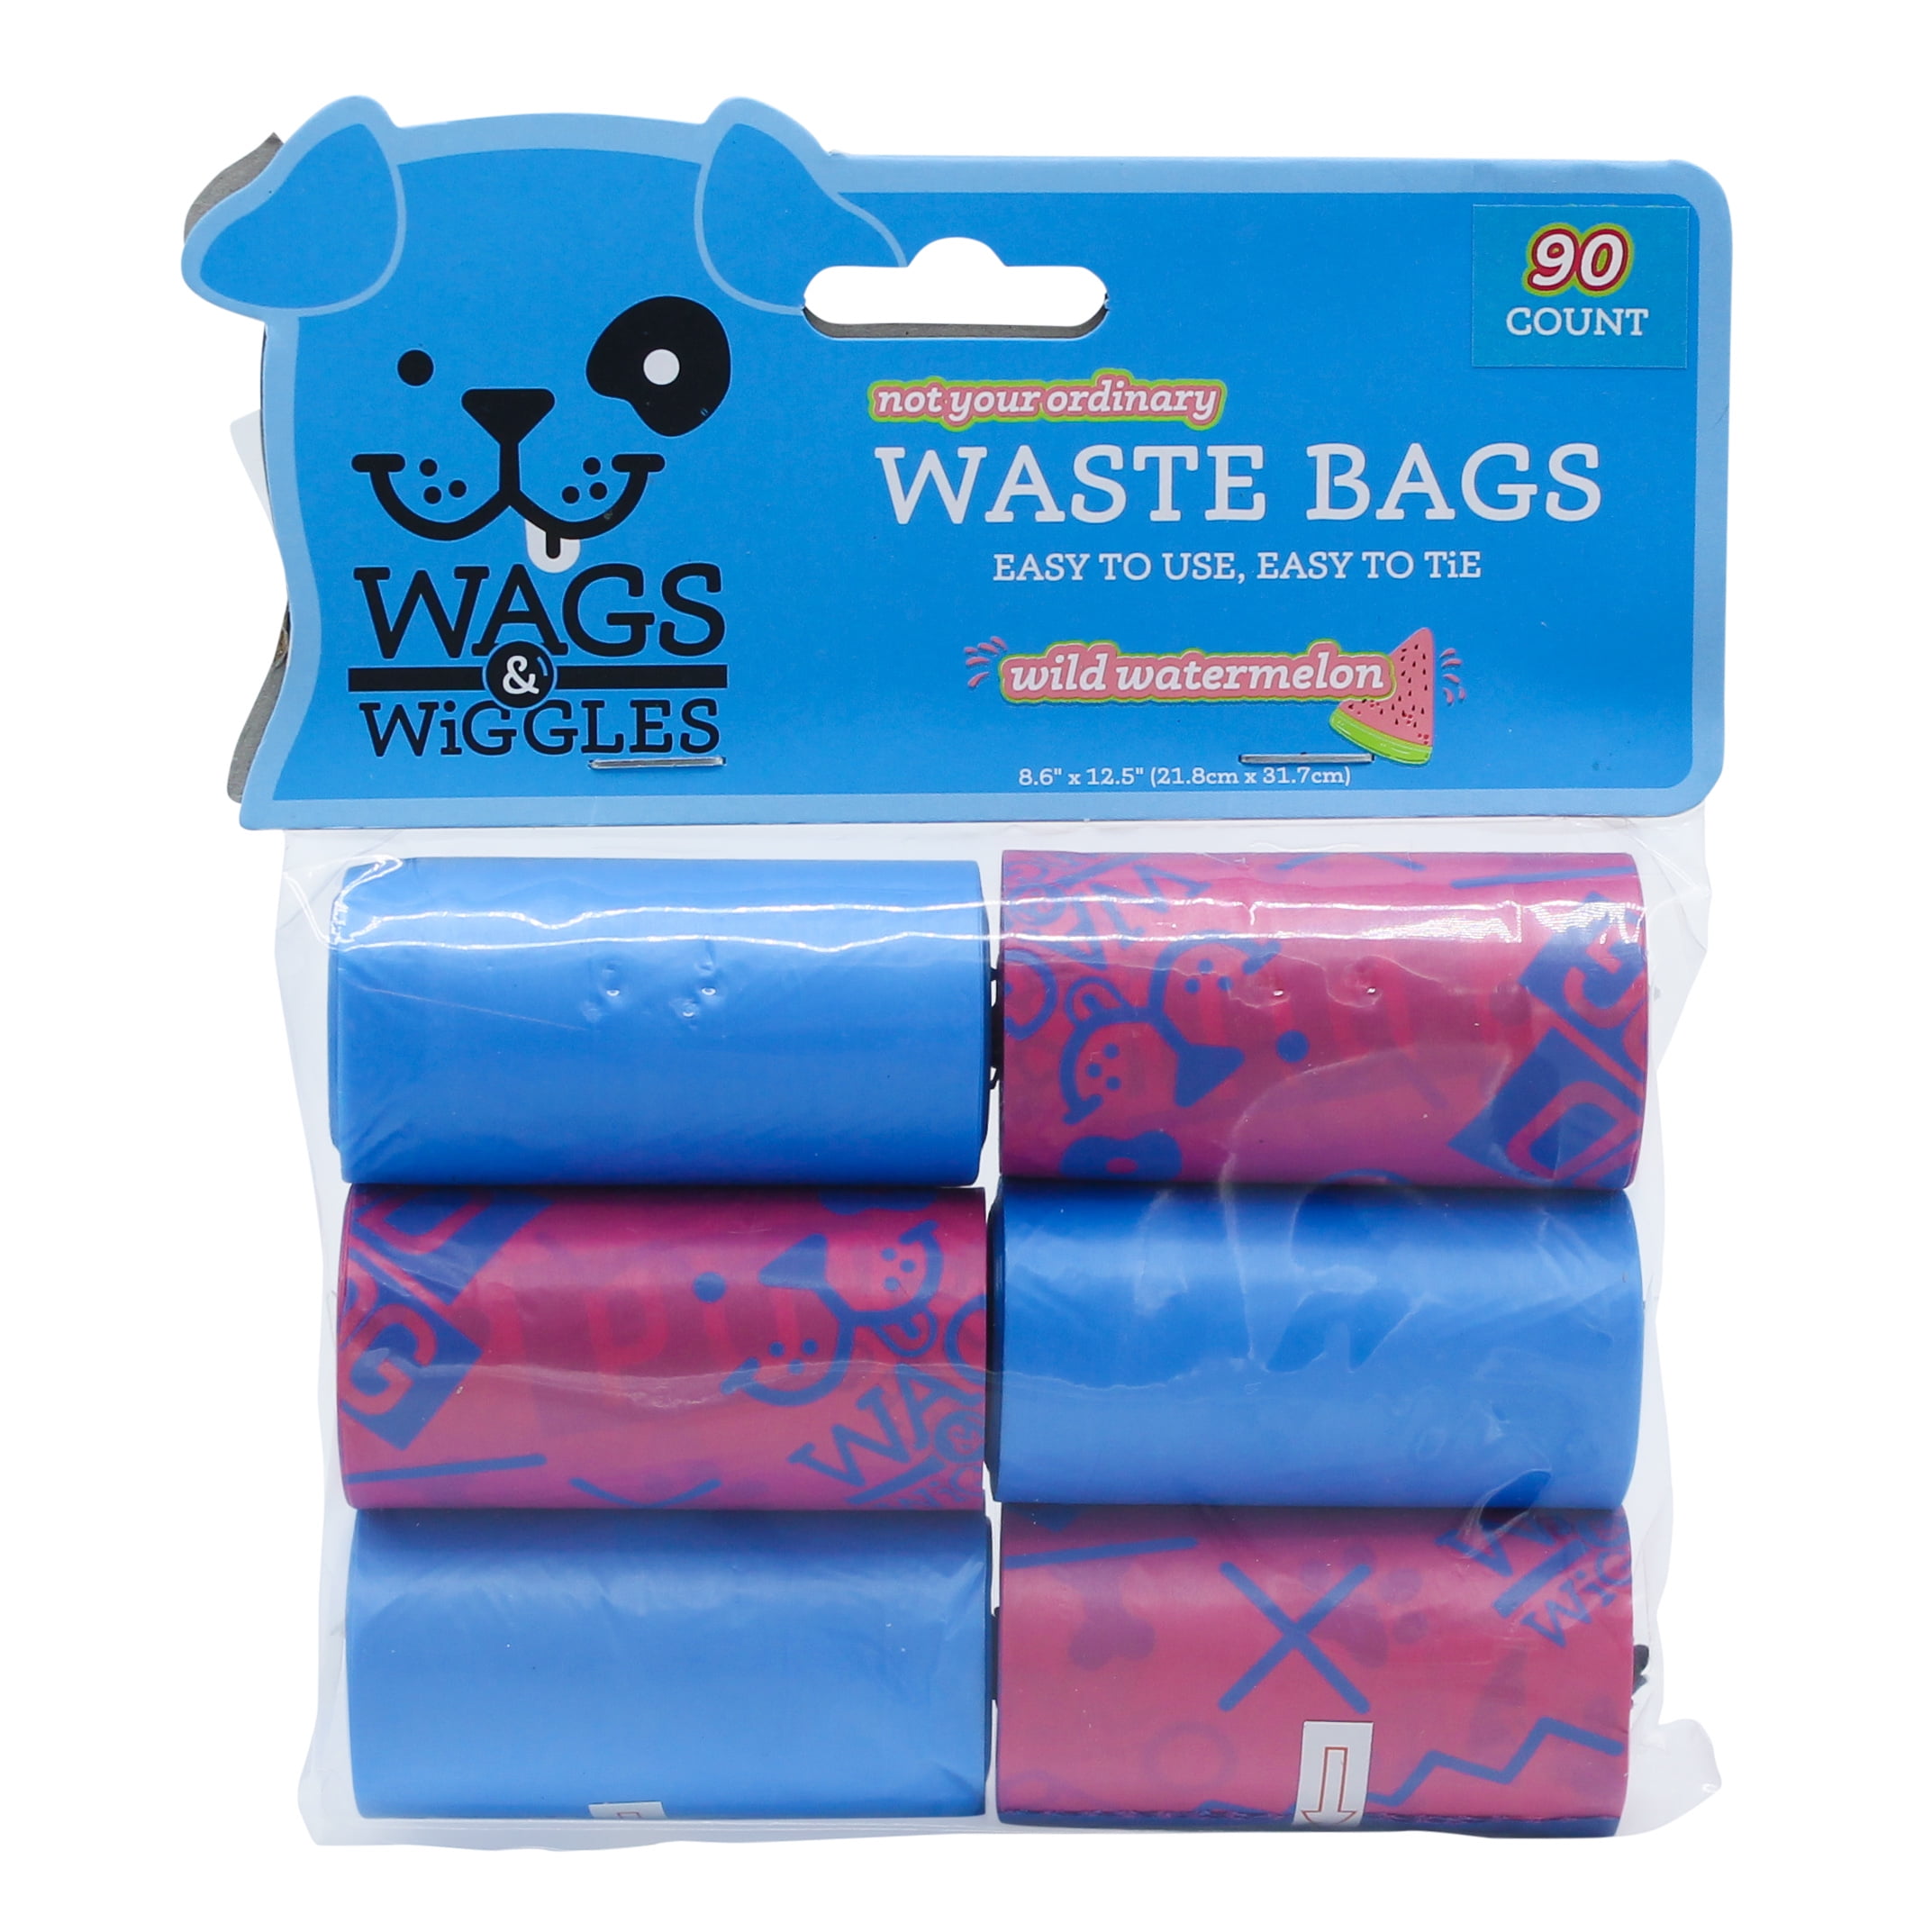 Gluvlt 2 in 1 Dog Waste Bags – GluvItBag